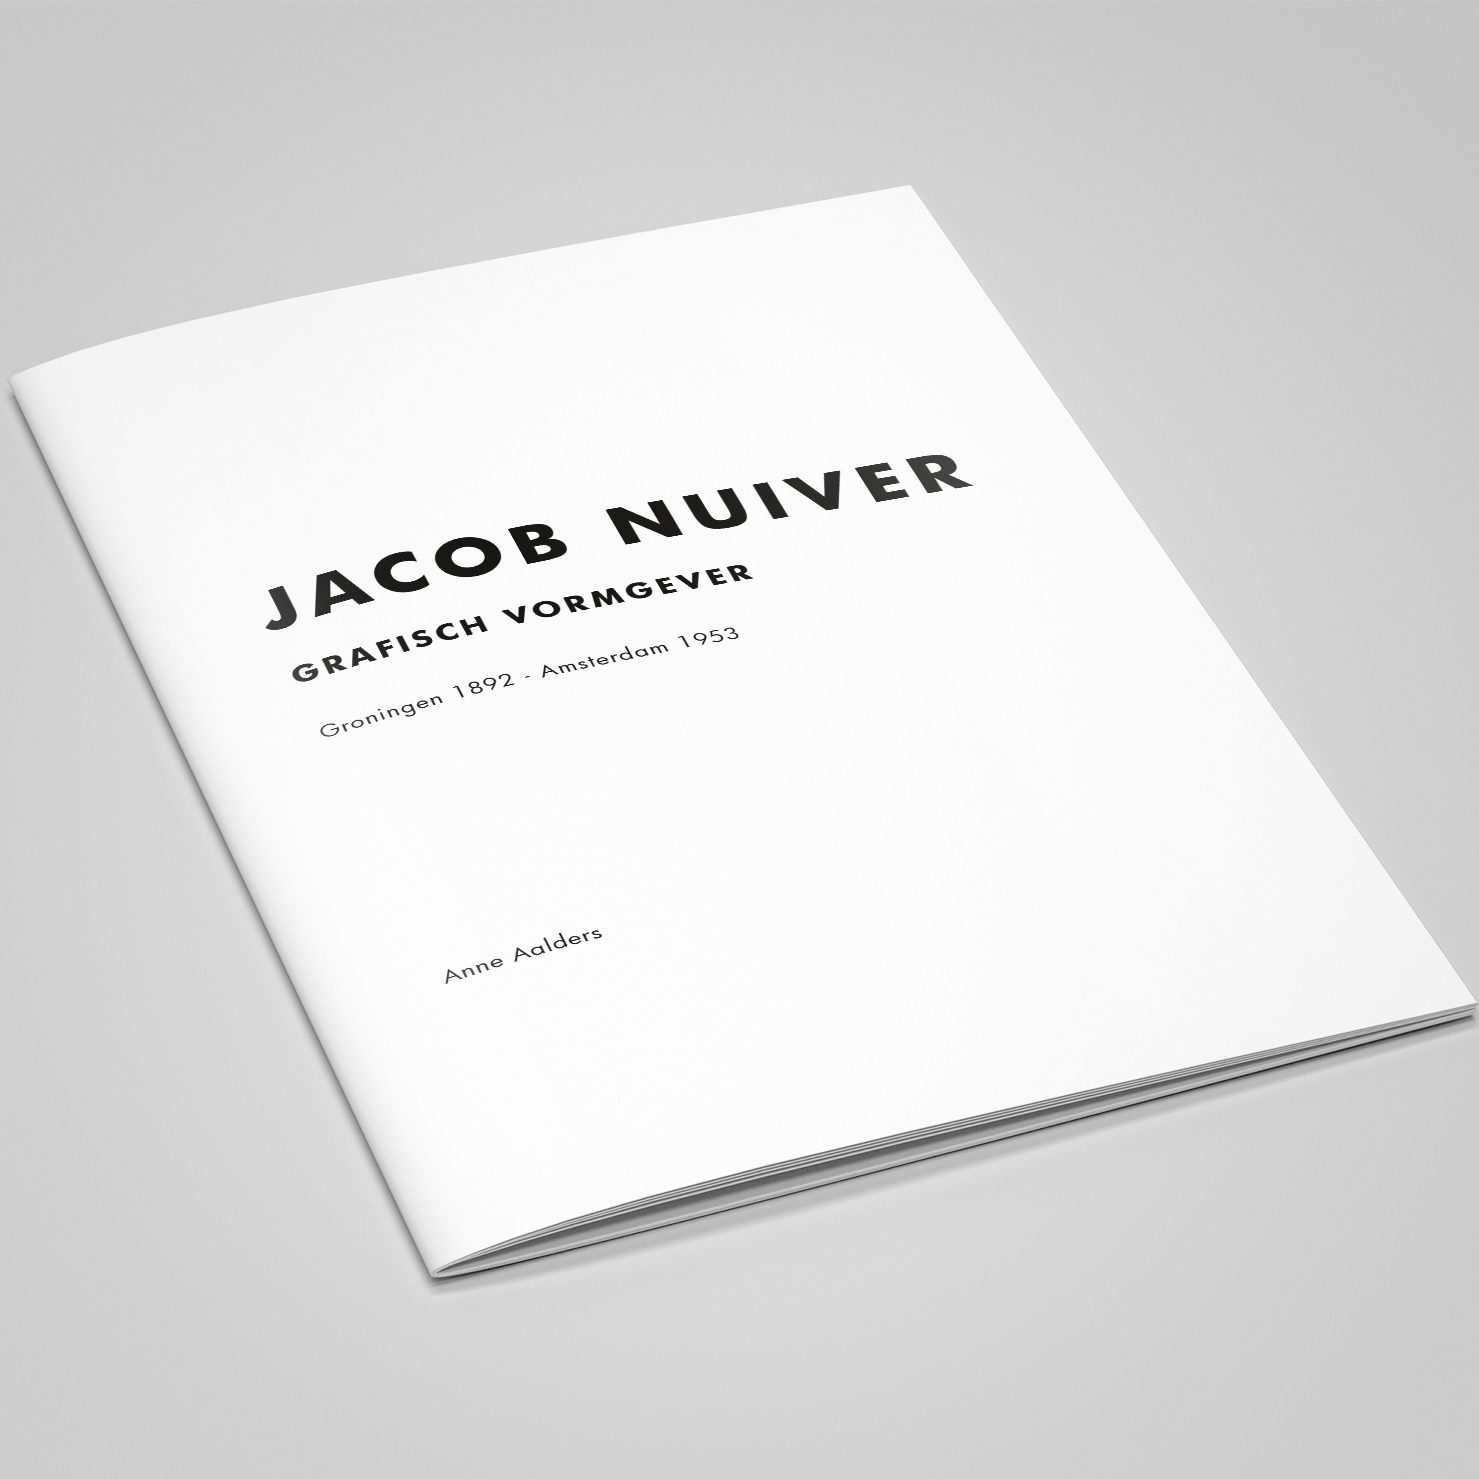 Jacob Nuiver Cahier expositie Godert Walter